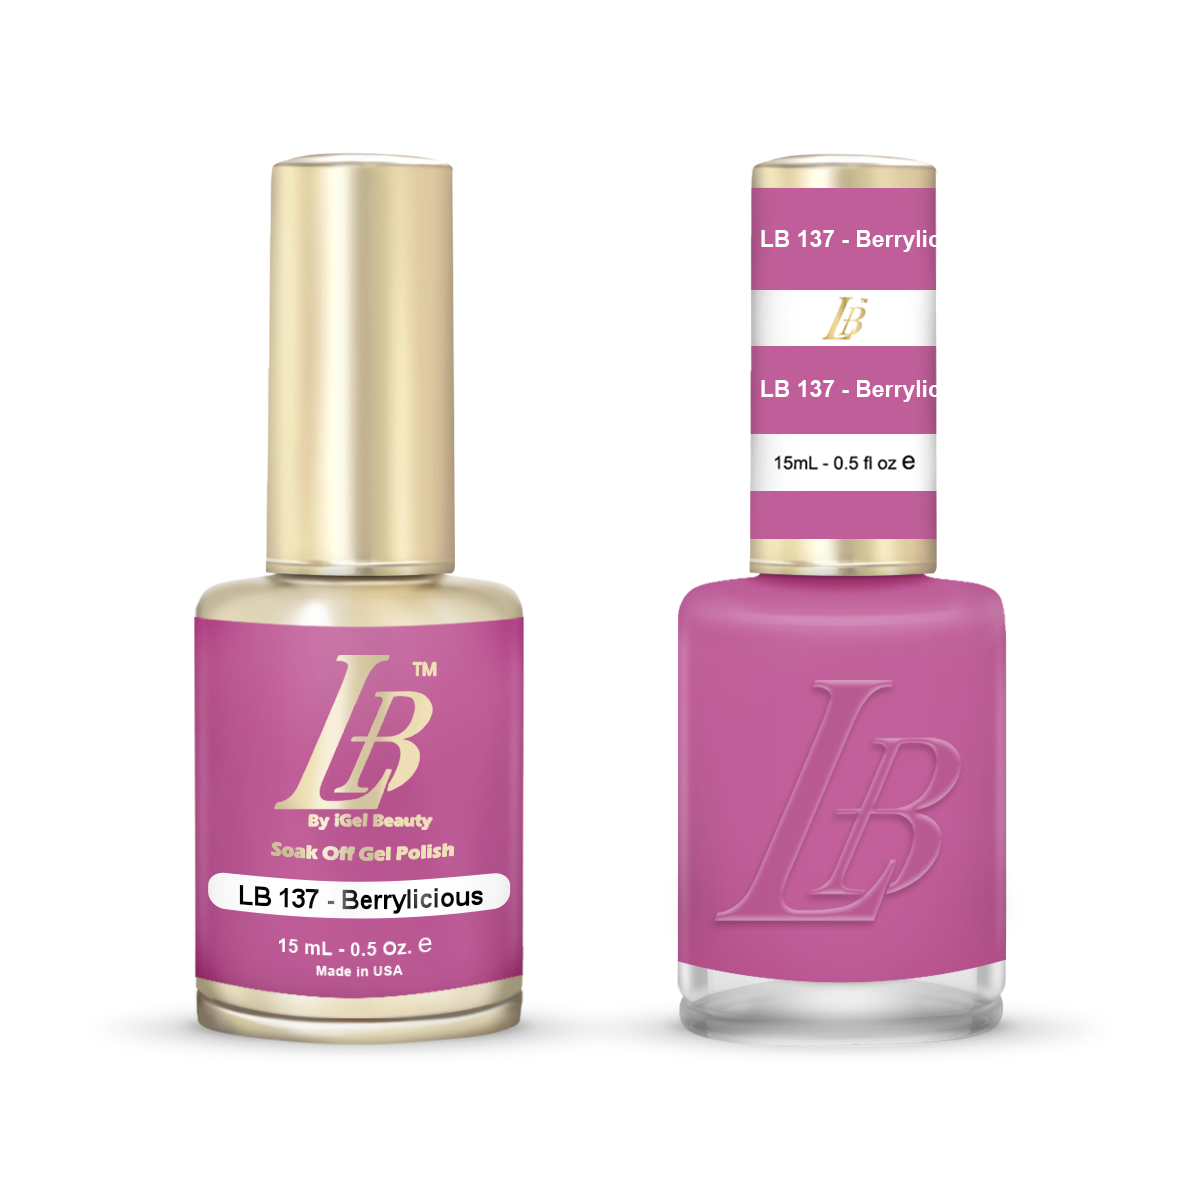 LB Duo - LB137 Berrylicious